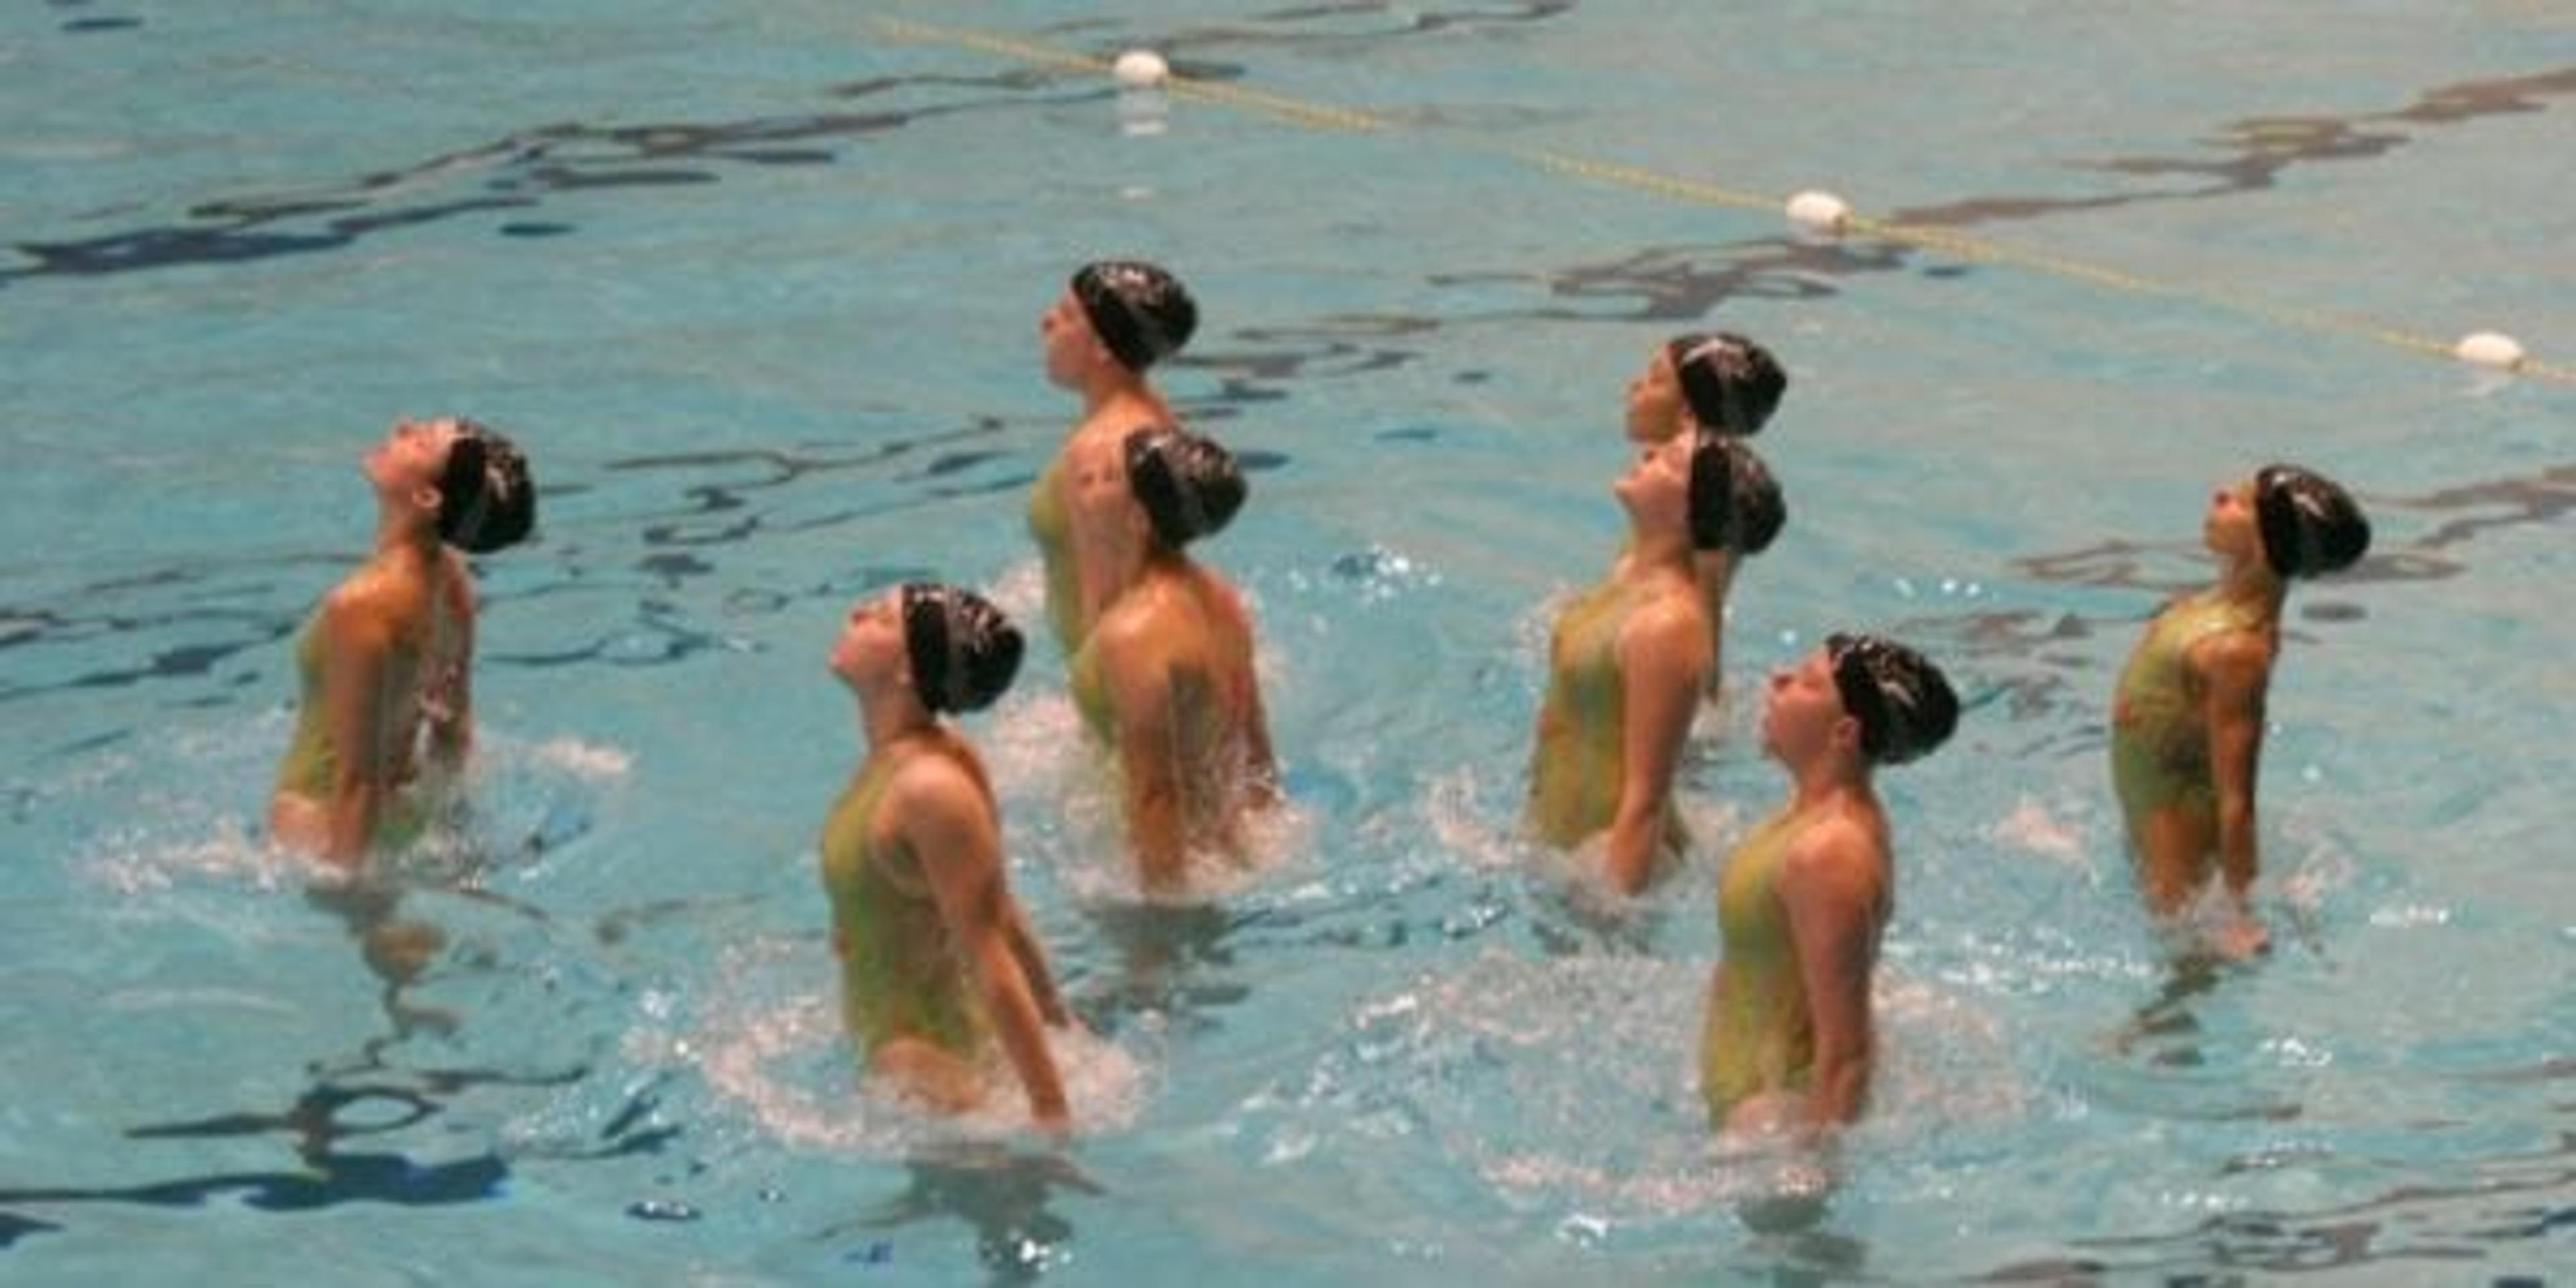 sychronized swimming